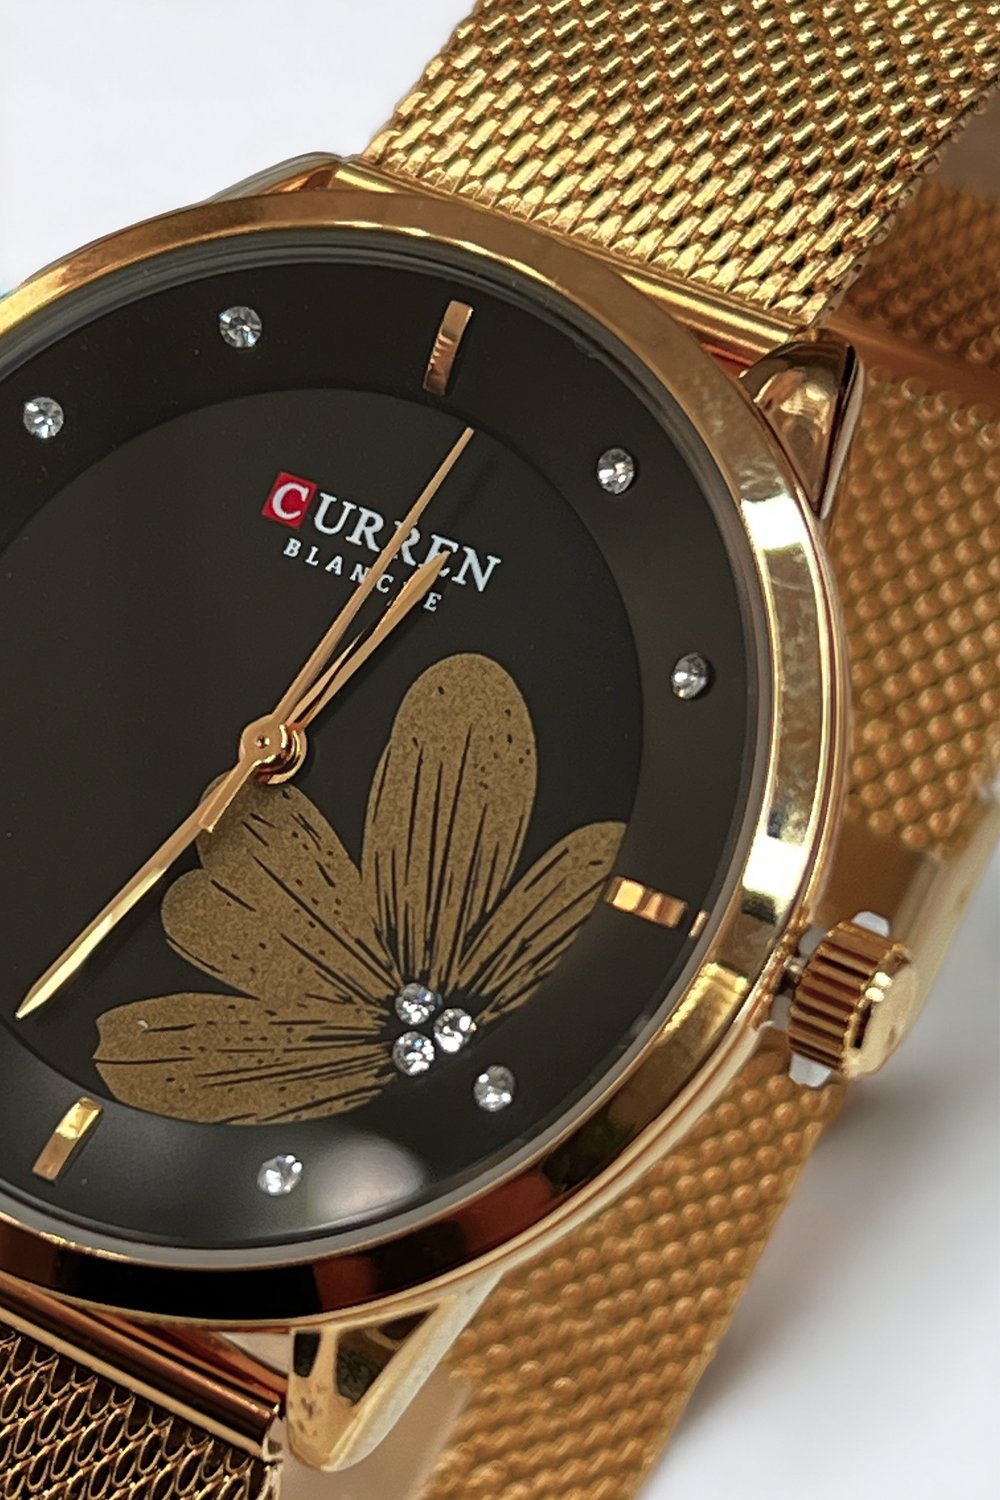 Curren 9048 Γυναικείο ρολόι με σχέδιο